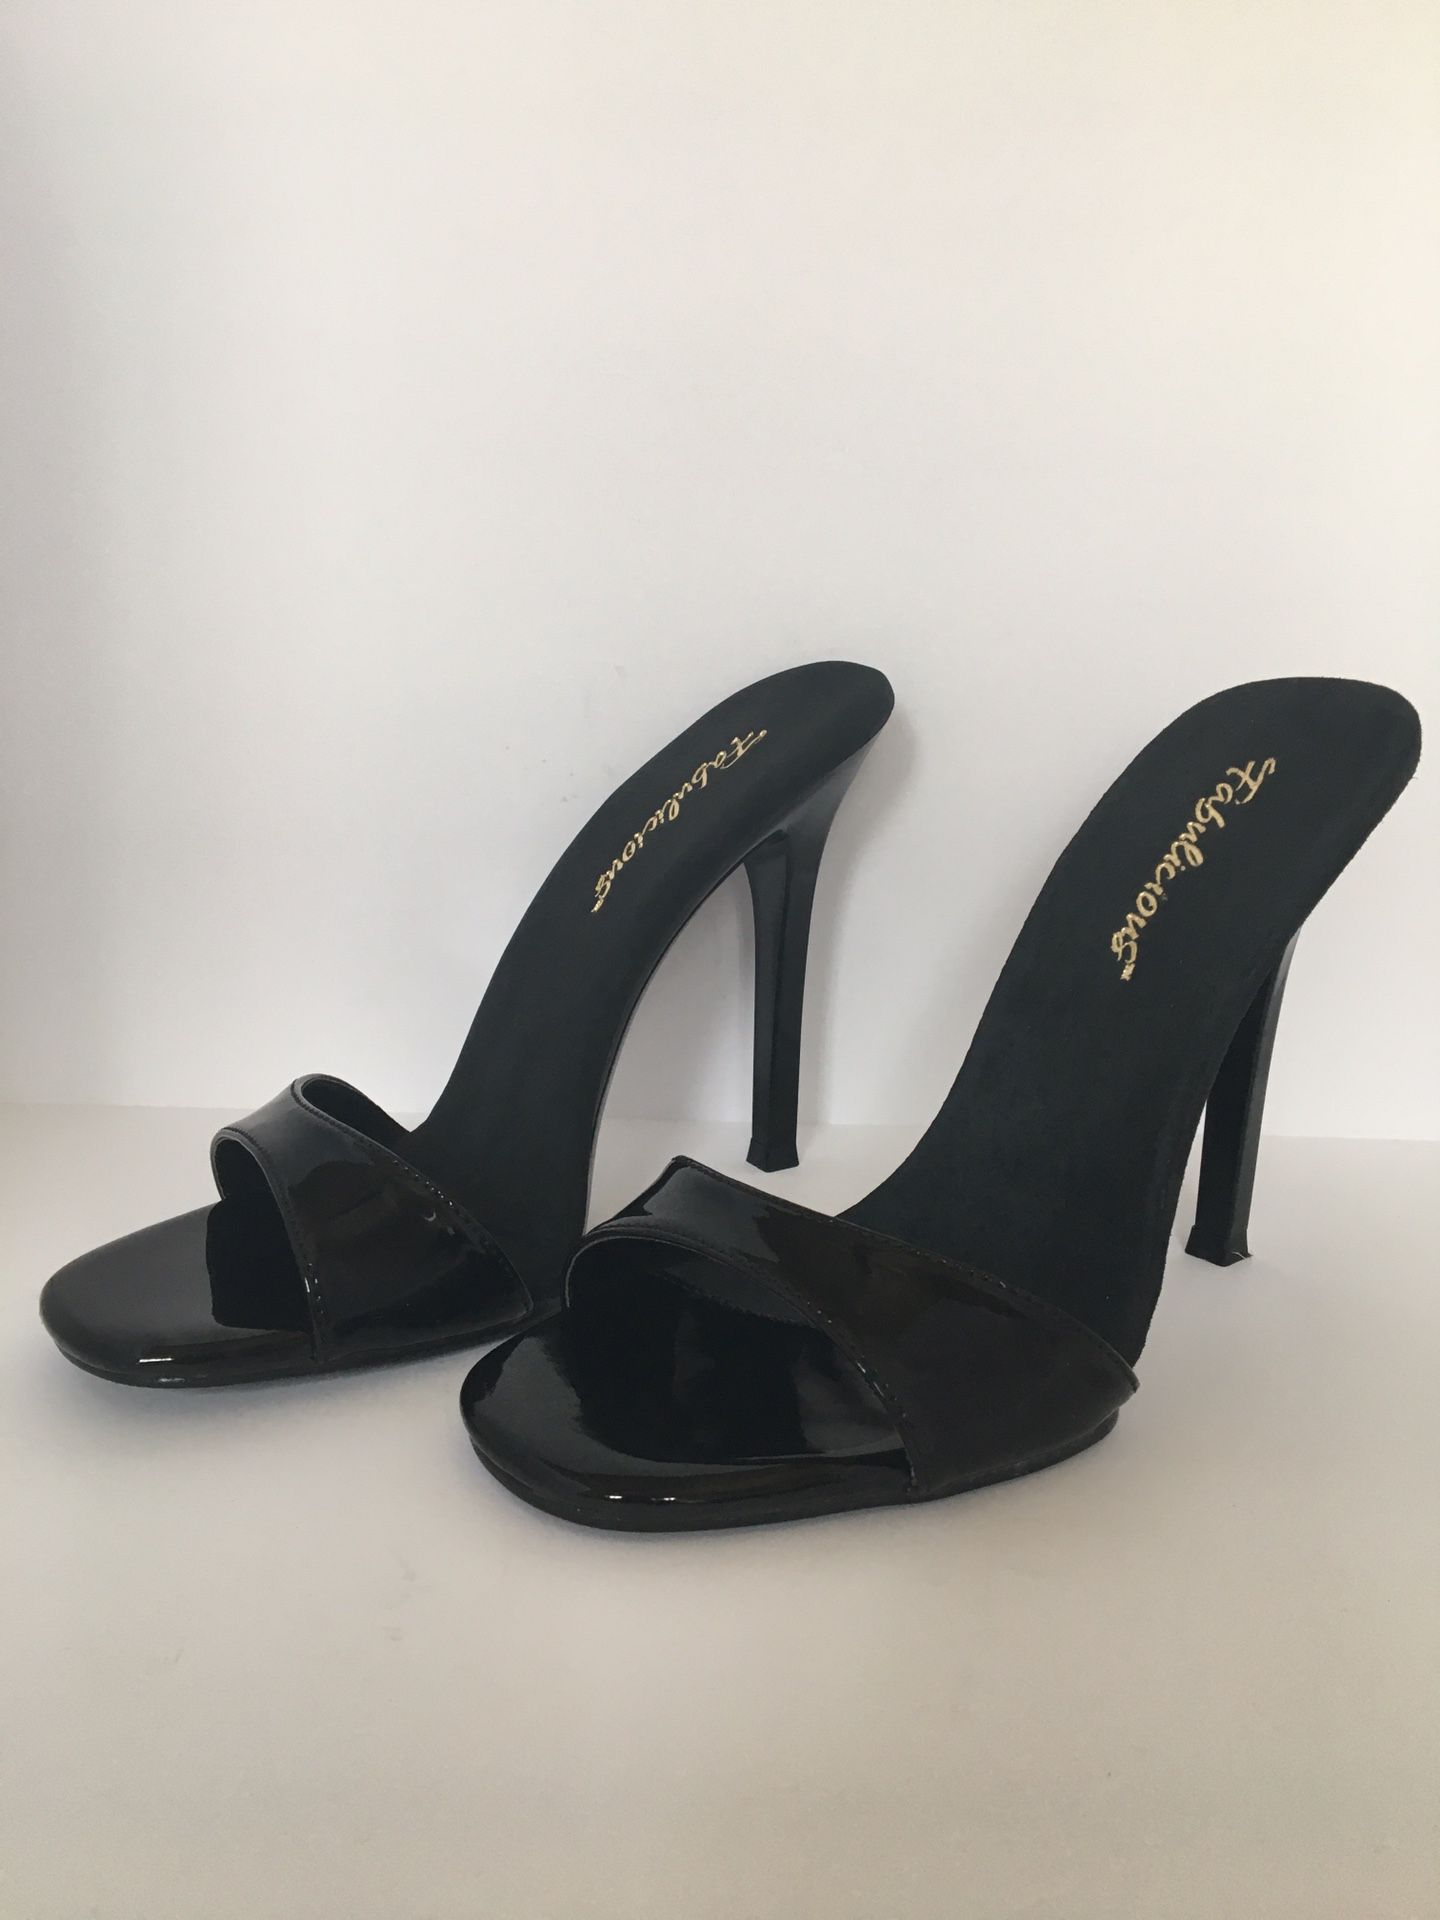 Fabulicious GALA 01 Women’s 4 1/2” High Heel Slip On Black Mules Size 9M